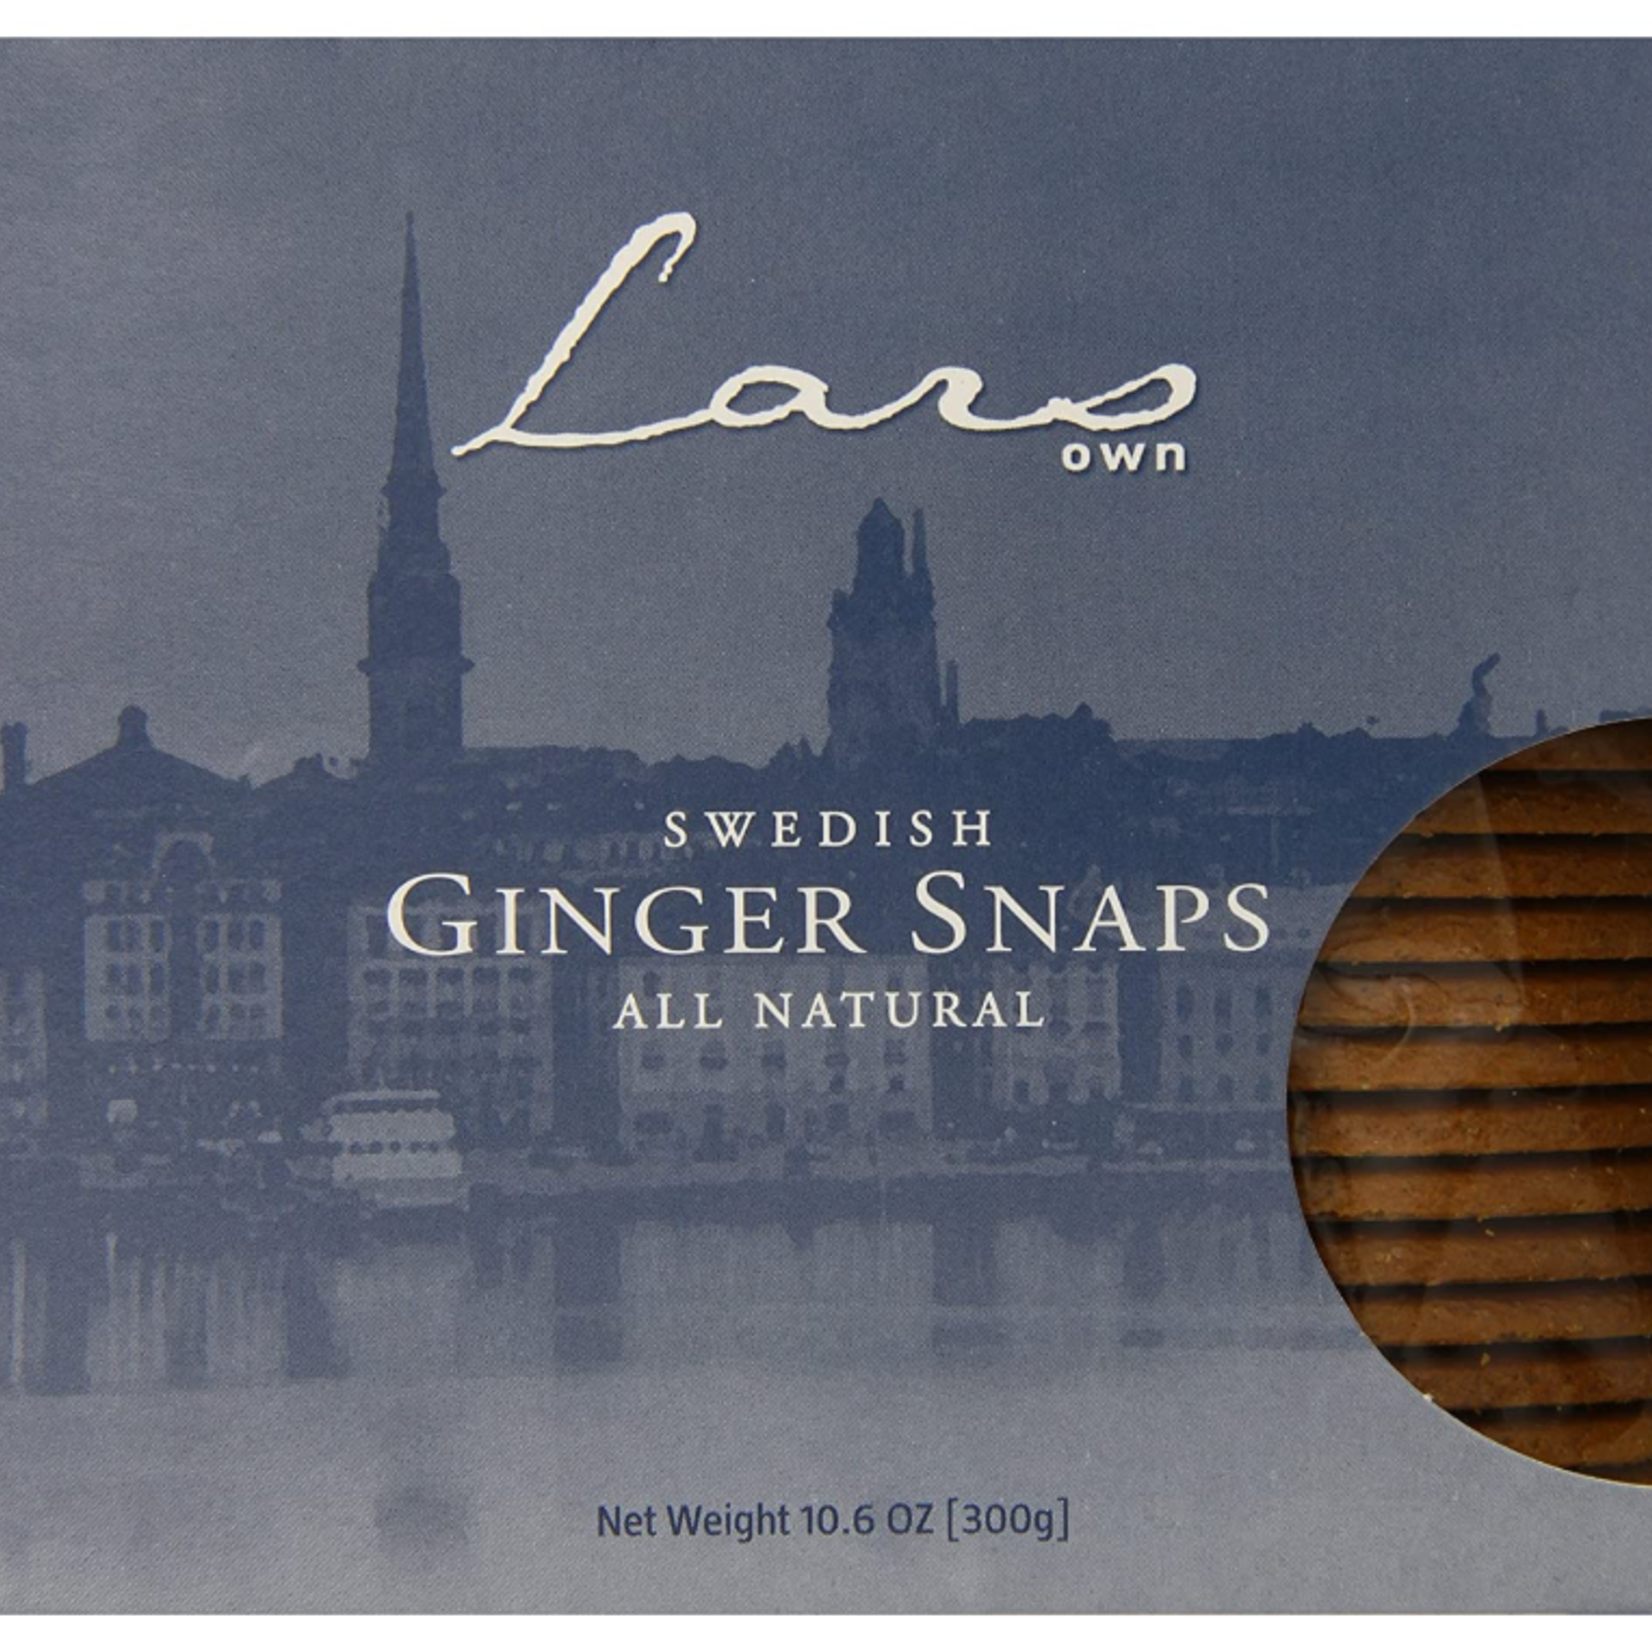 European Imports Lars' Own Ginger Snaps